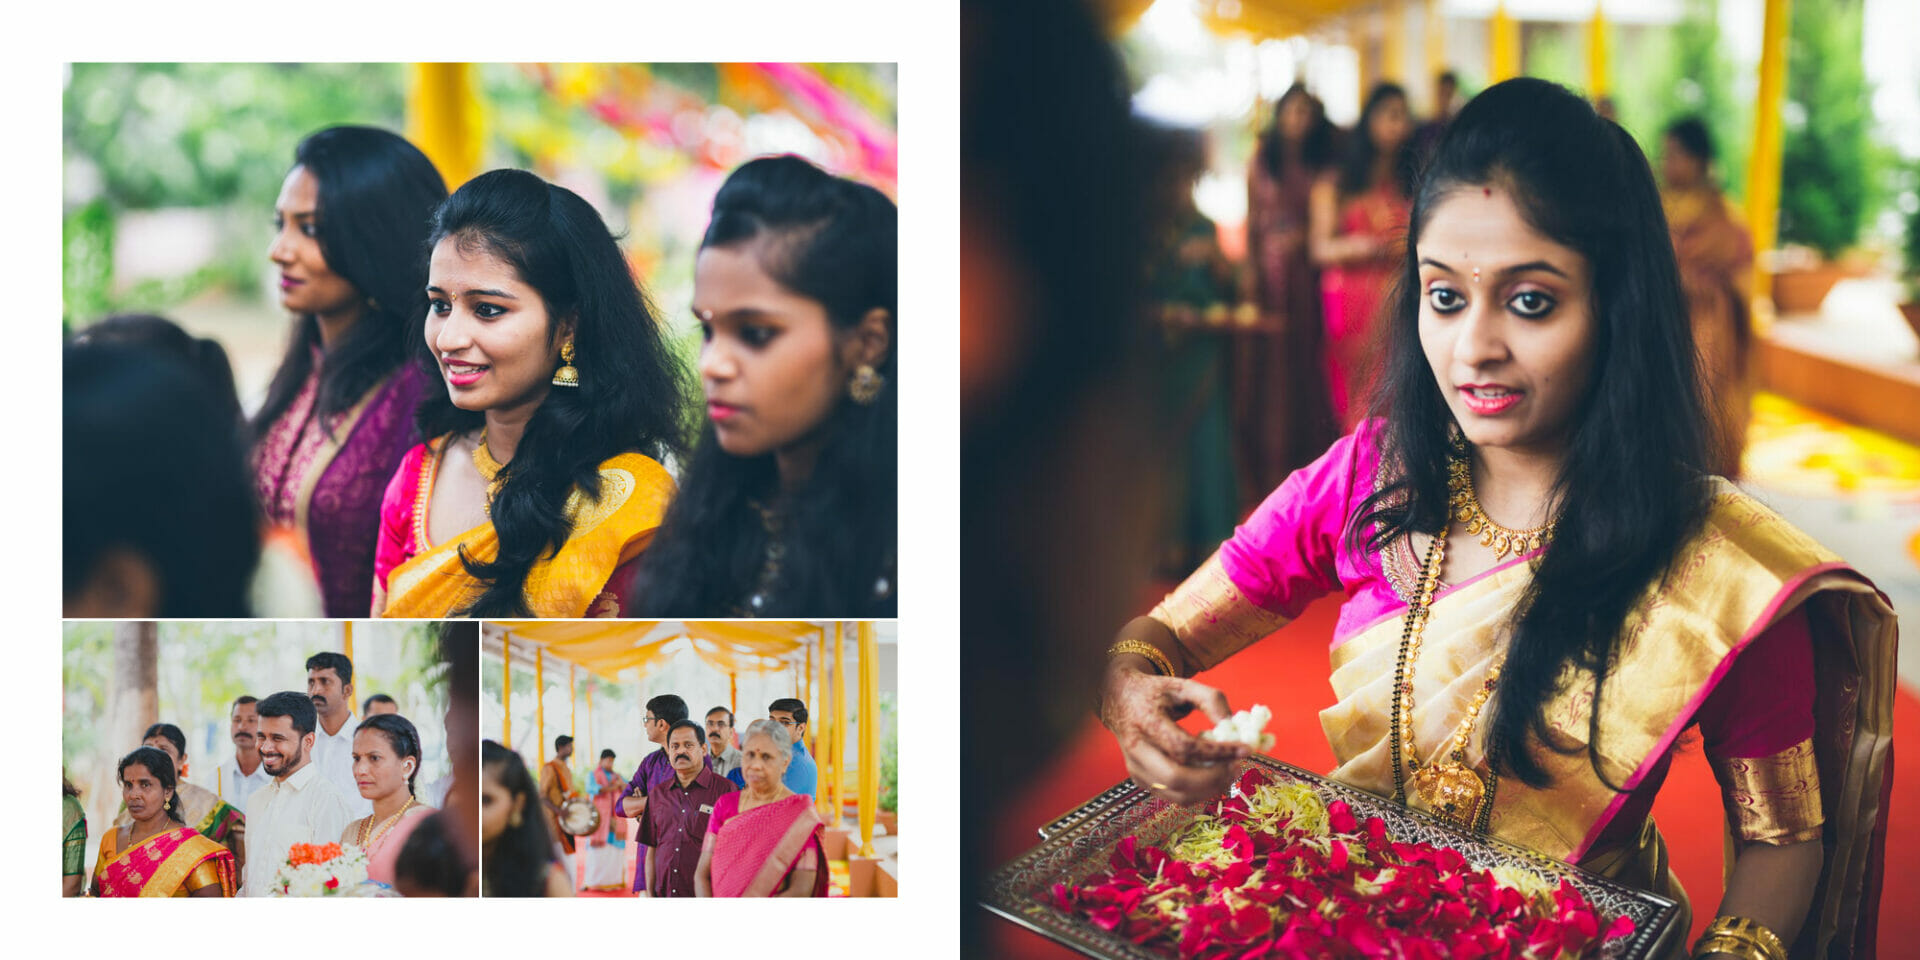 shruti annayya sree vikash photography wedding kalathur gardens 11